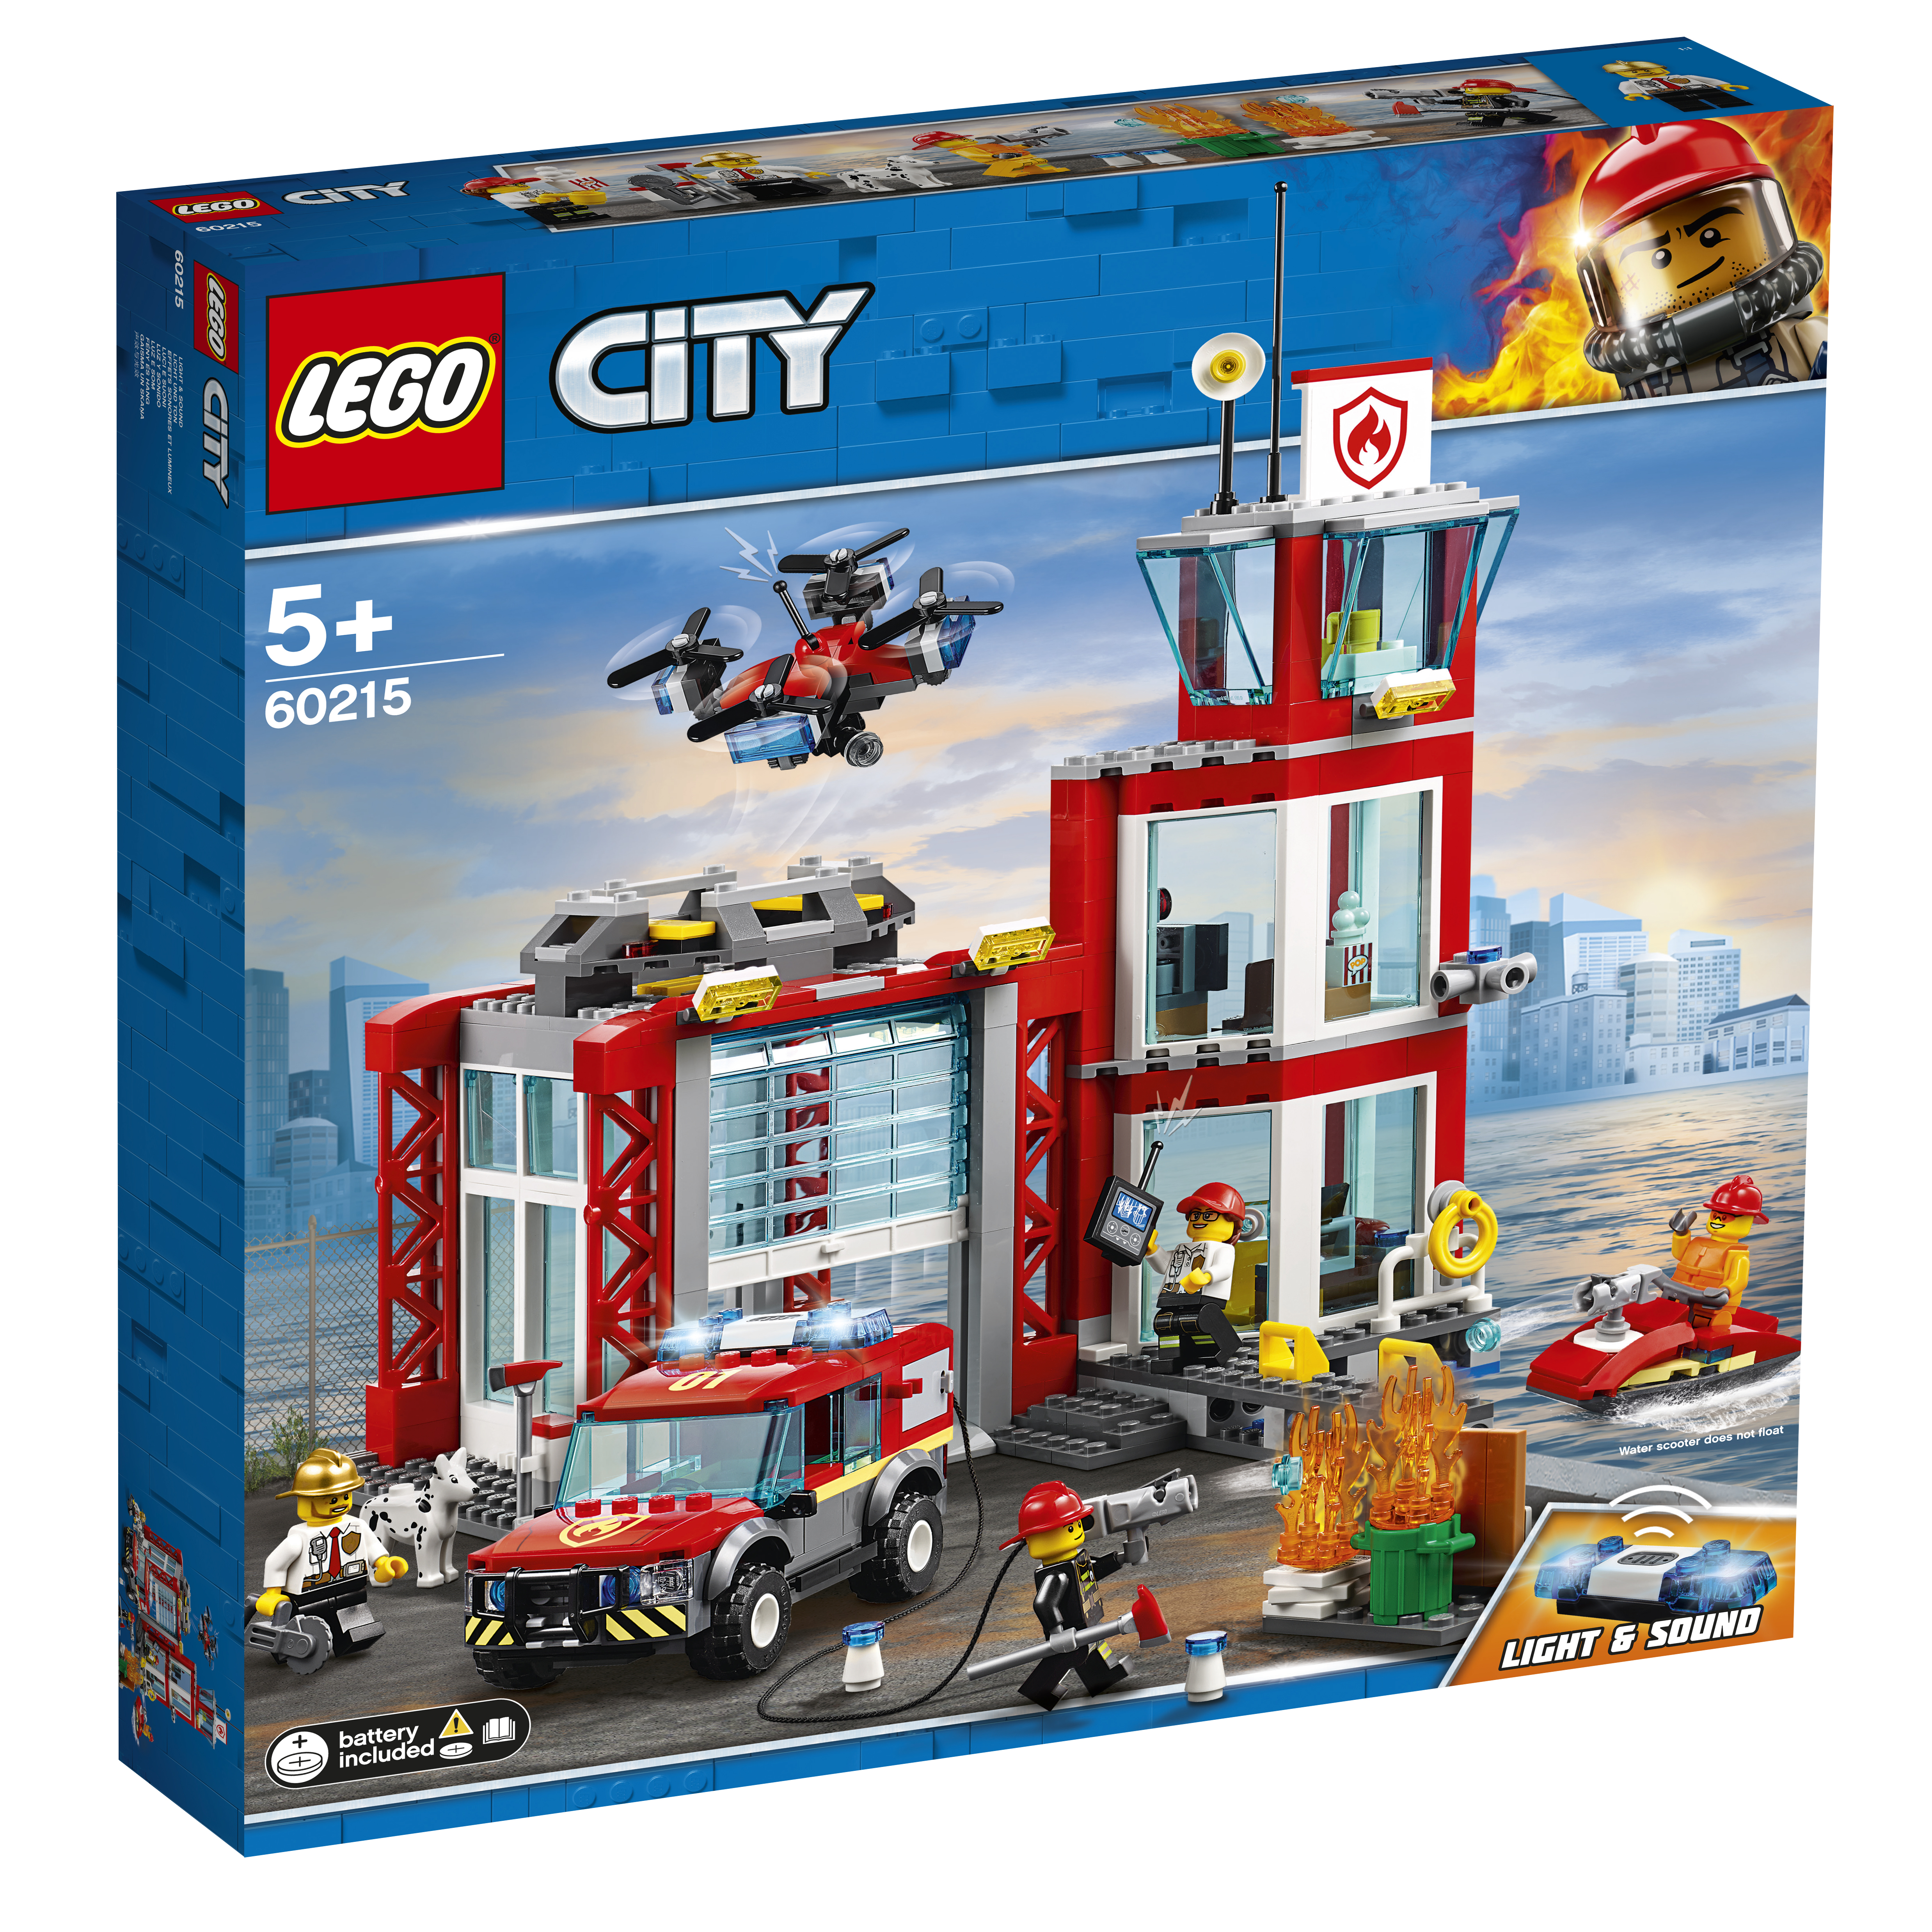 + NEU & OVP Feuerwehr Kinderuhr 8021209 Firefighter + + Lego CITY + 